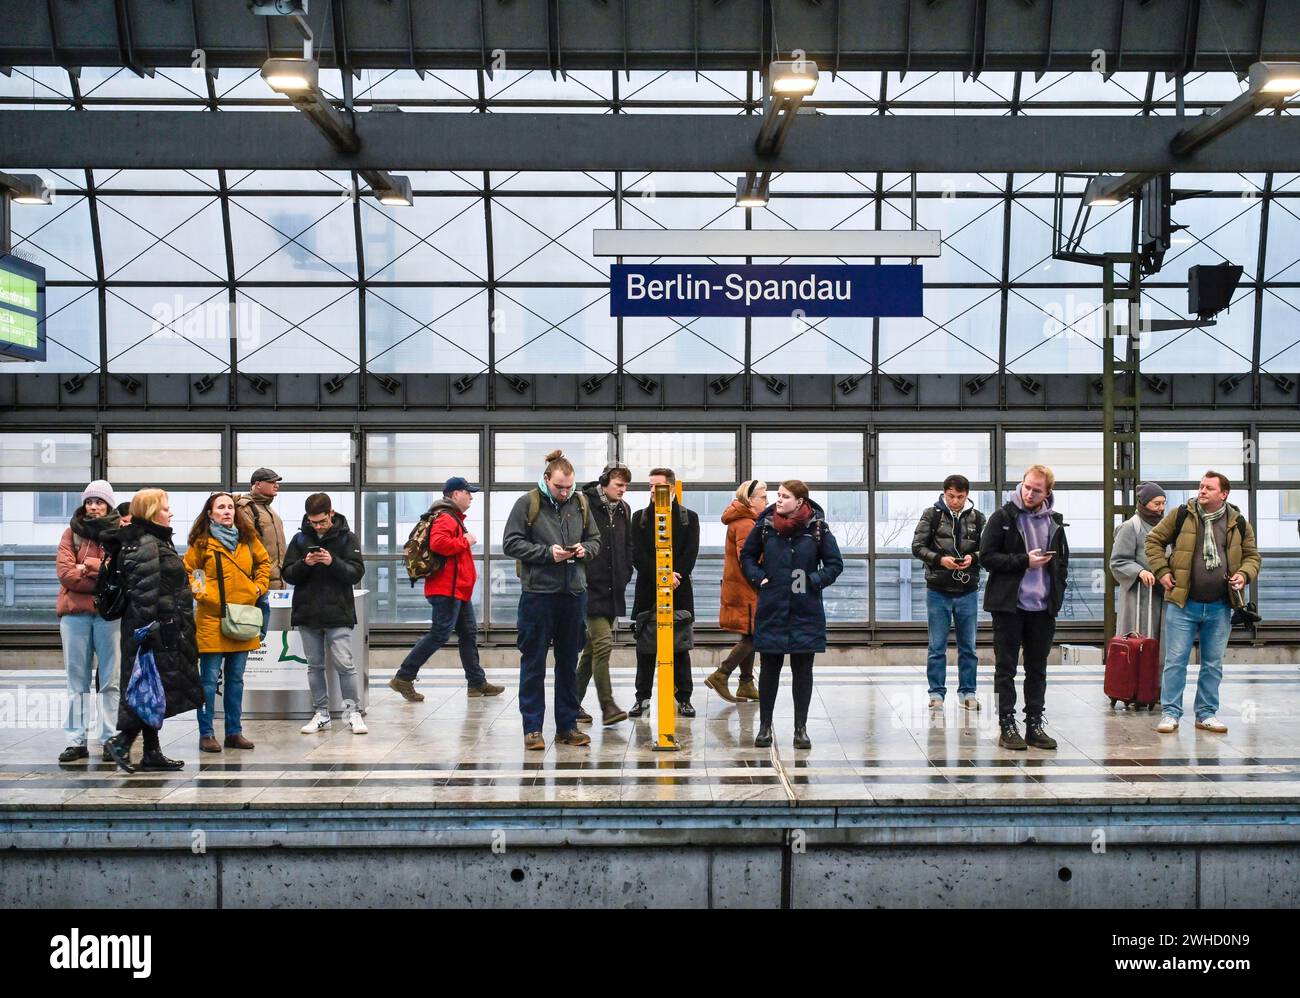 Passeggeri in attesa, stazione ferroviaria di Spandau, Berlino, Germania Foto Stock